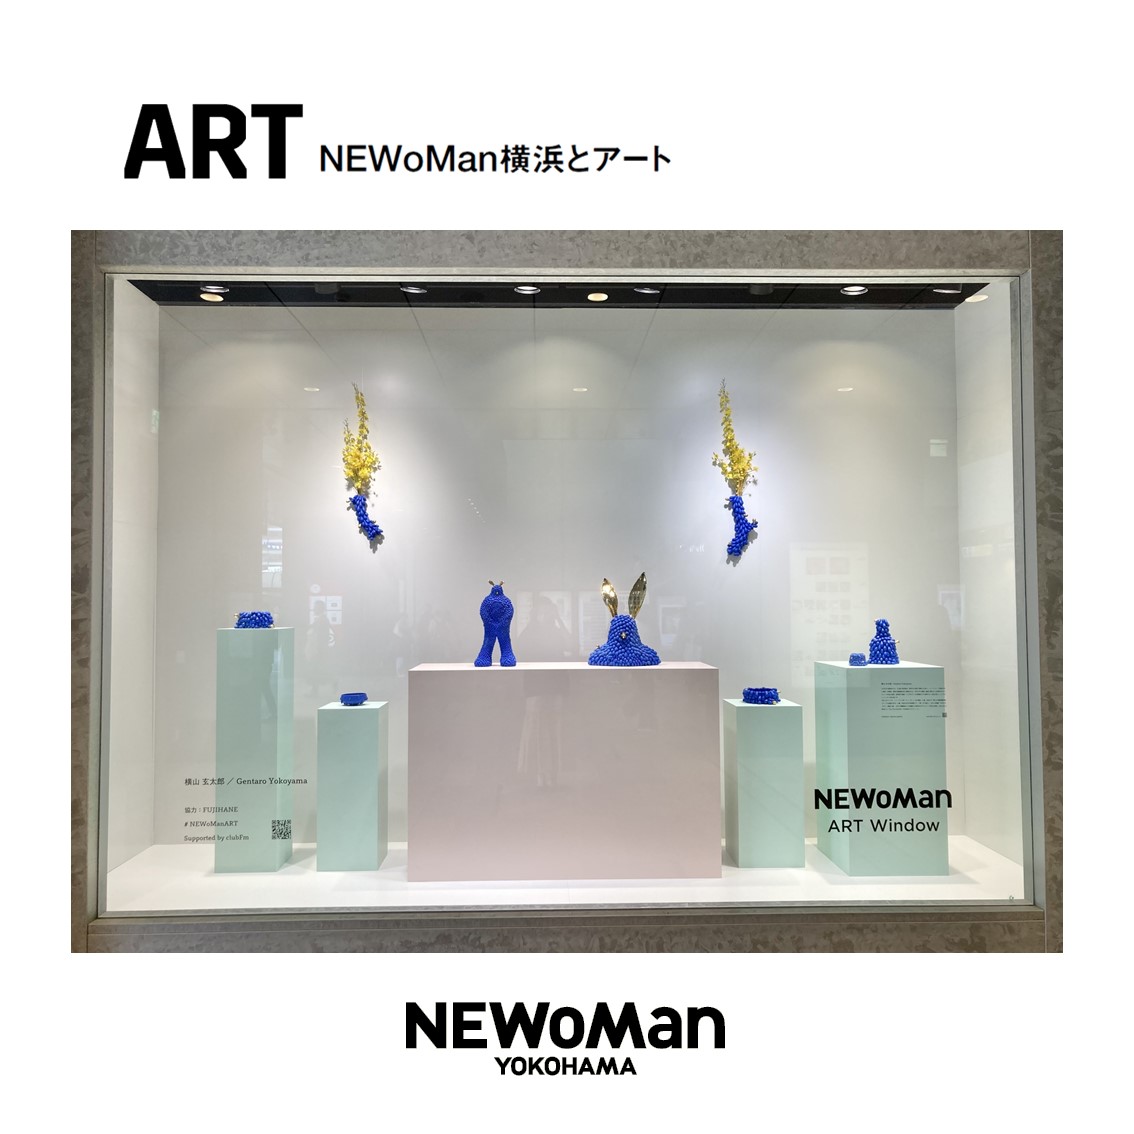 ART Window 2月20日（火）より横山玄太郎氏の展示がスタート！